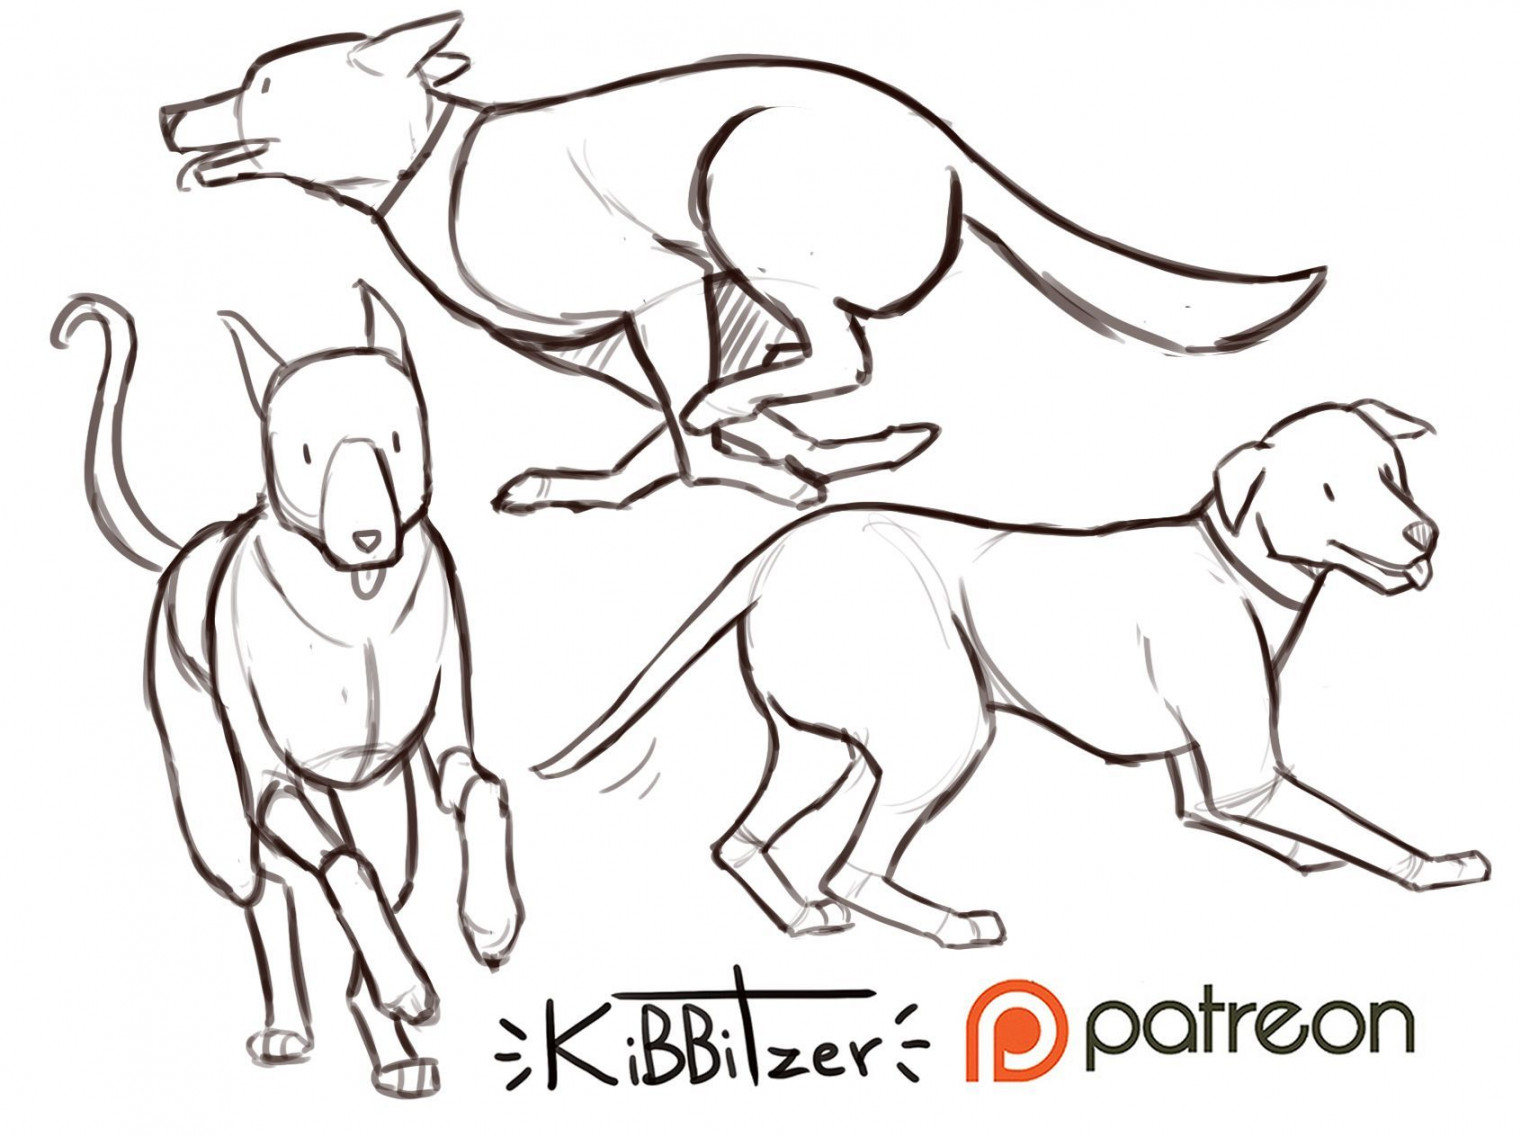 Dogs reference sheet -PREVIEW-  Kibbitzer  Dog drawing, Dog